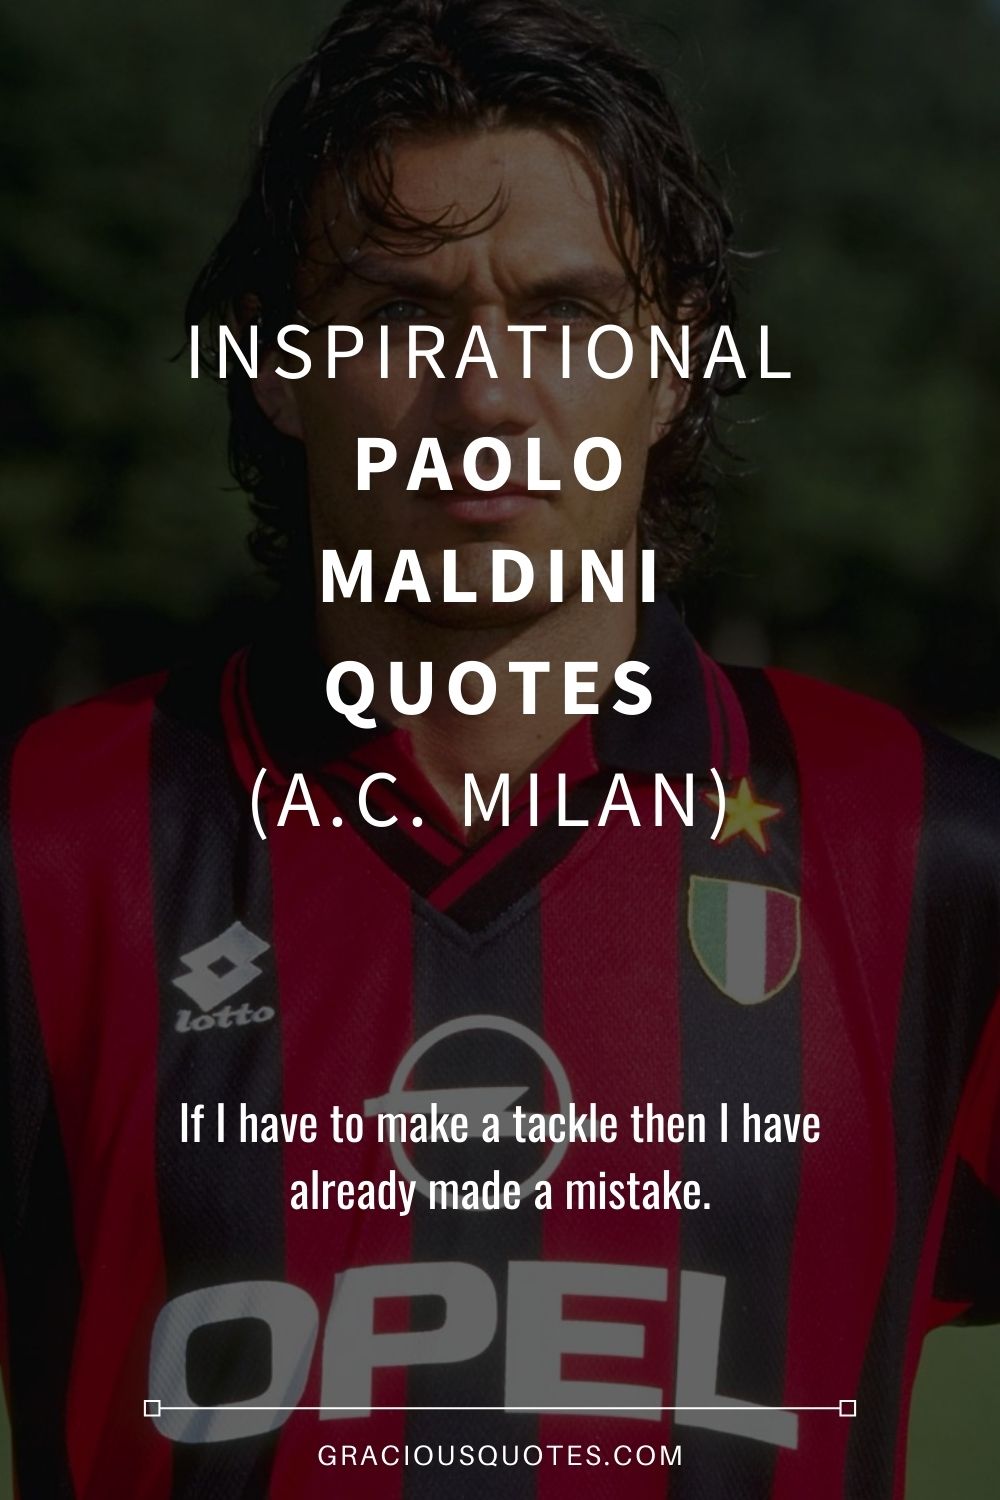 Inspirational Paolo Maldini Quotes (A.C. MILAN) - Gracious Quotes